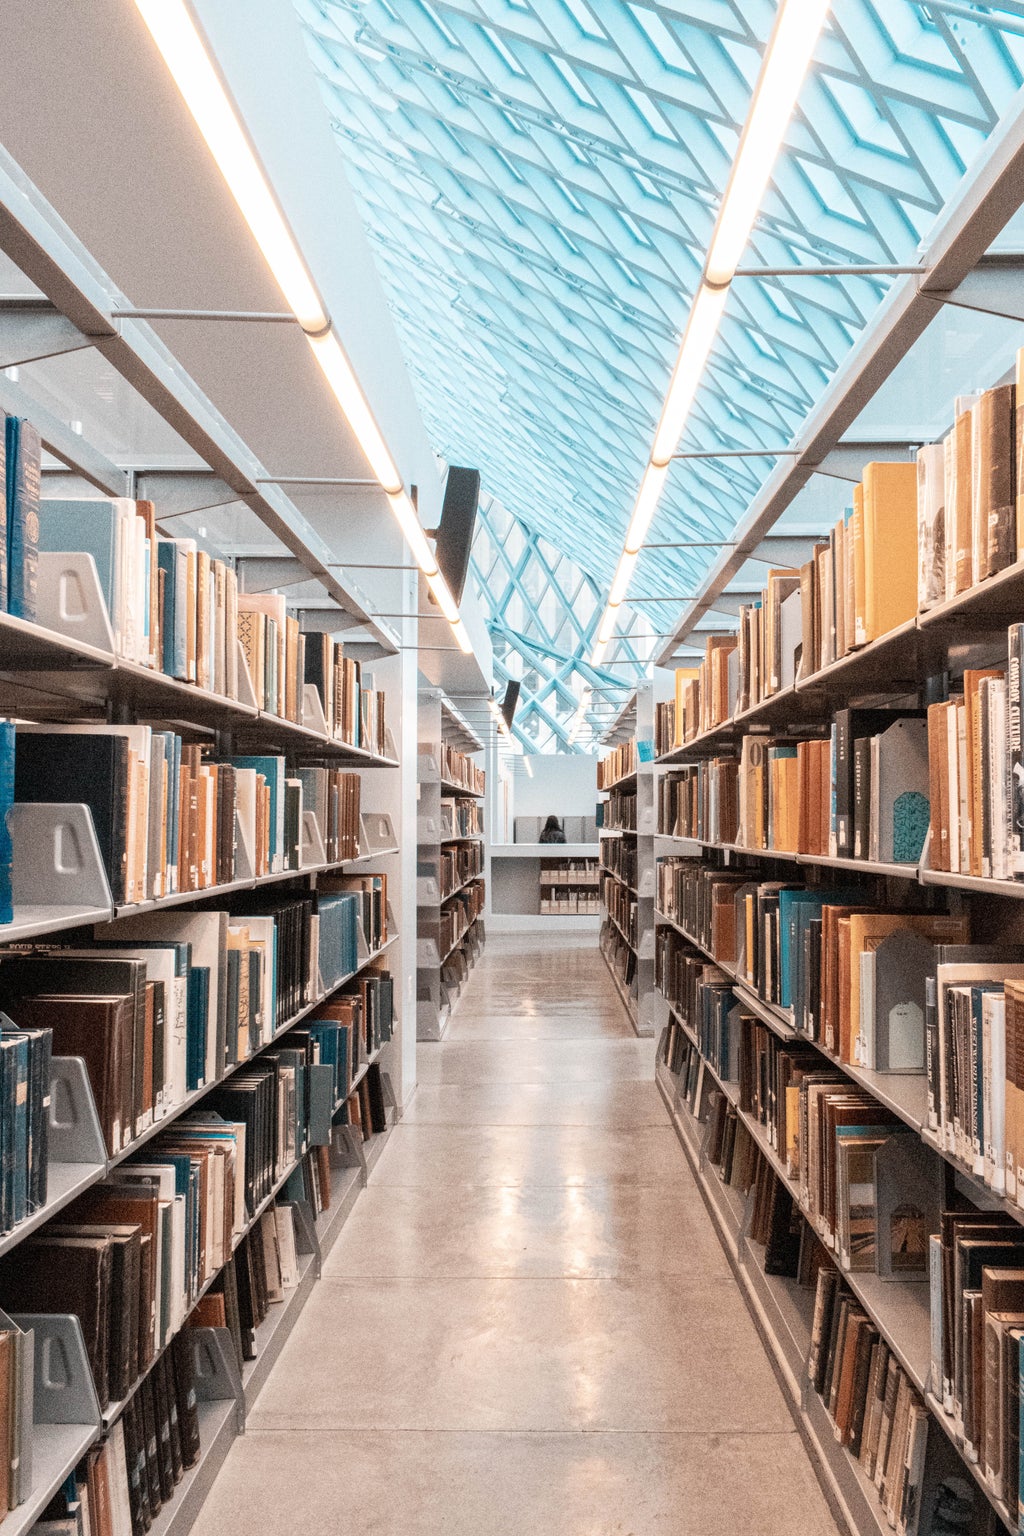 A library aisle